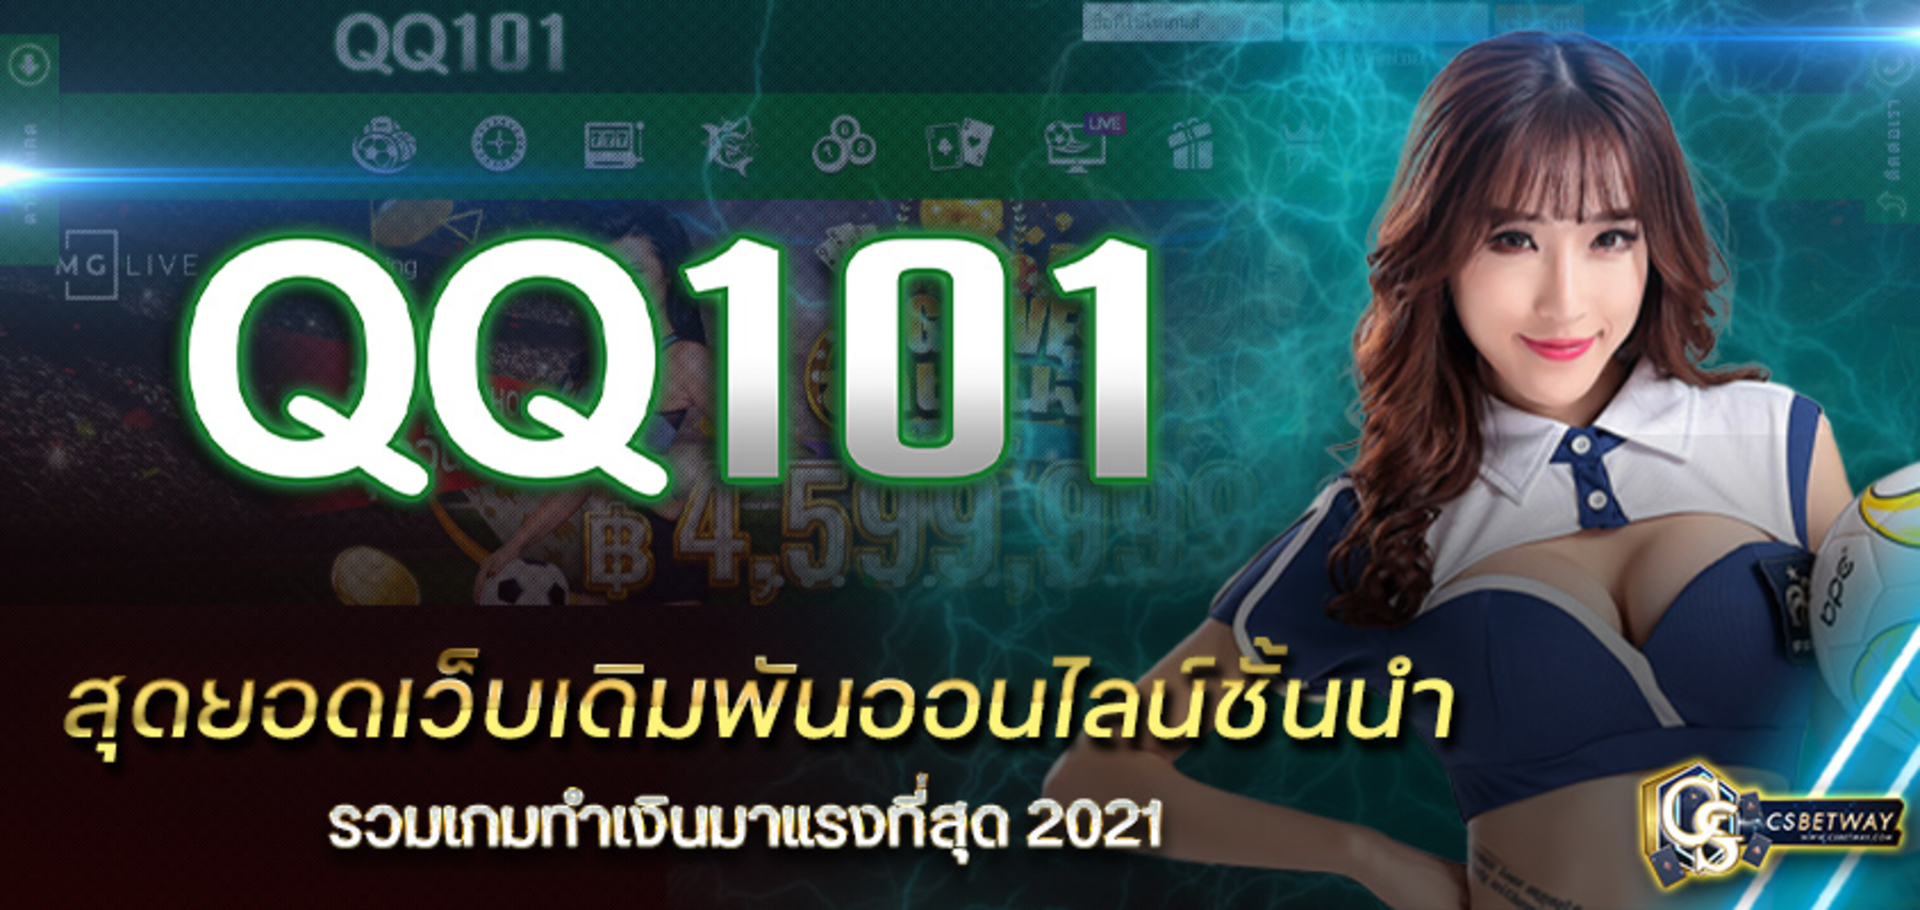 qq101 สุดยอดเว็บเดิมพันออนไลน์ชั้นนำ รวมเกมทำเงินมาแรงที่สุด 2021